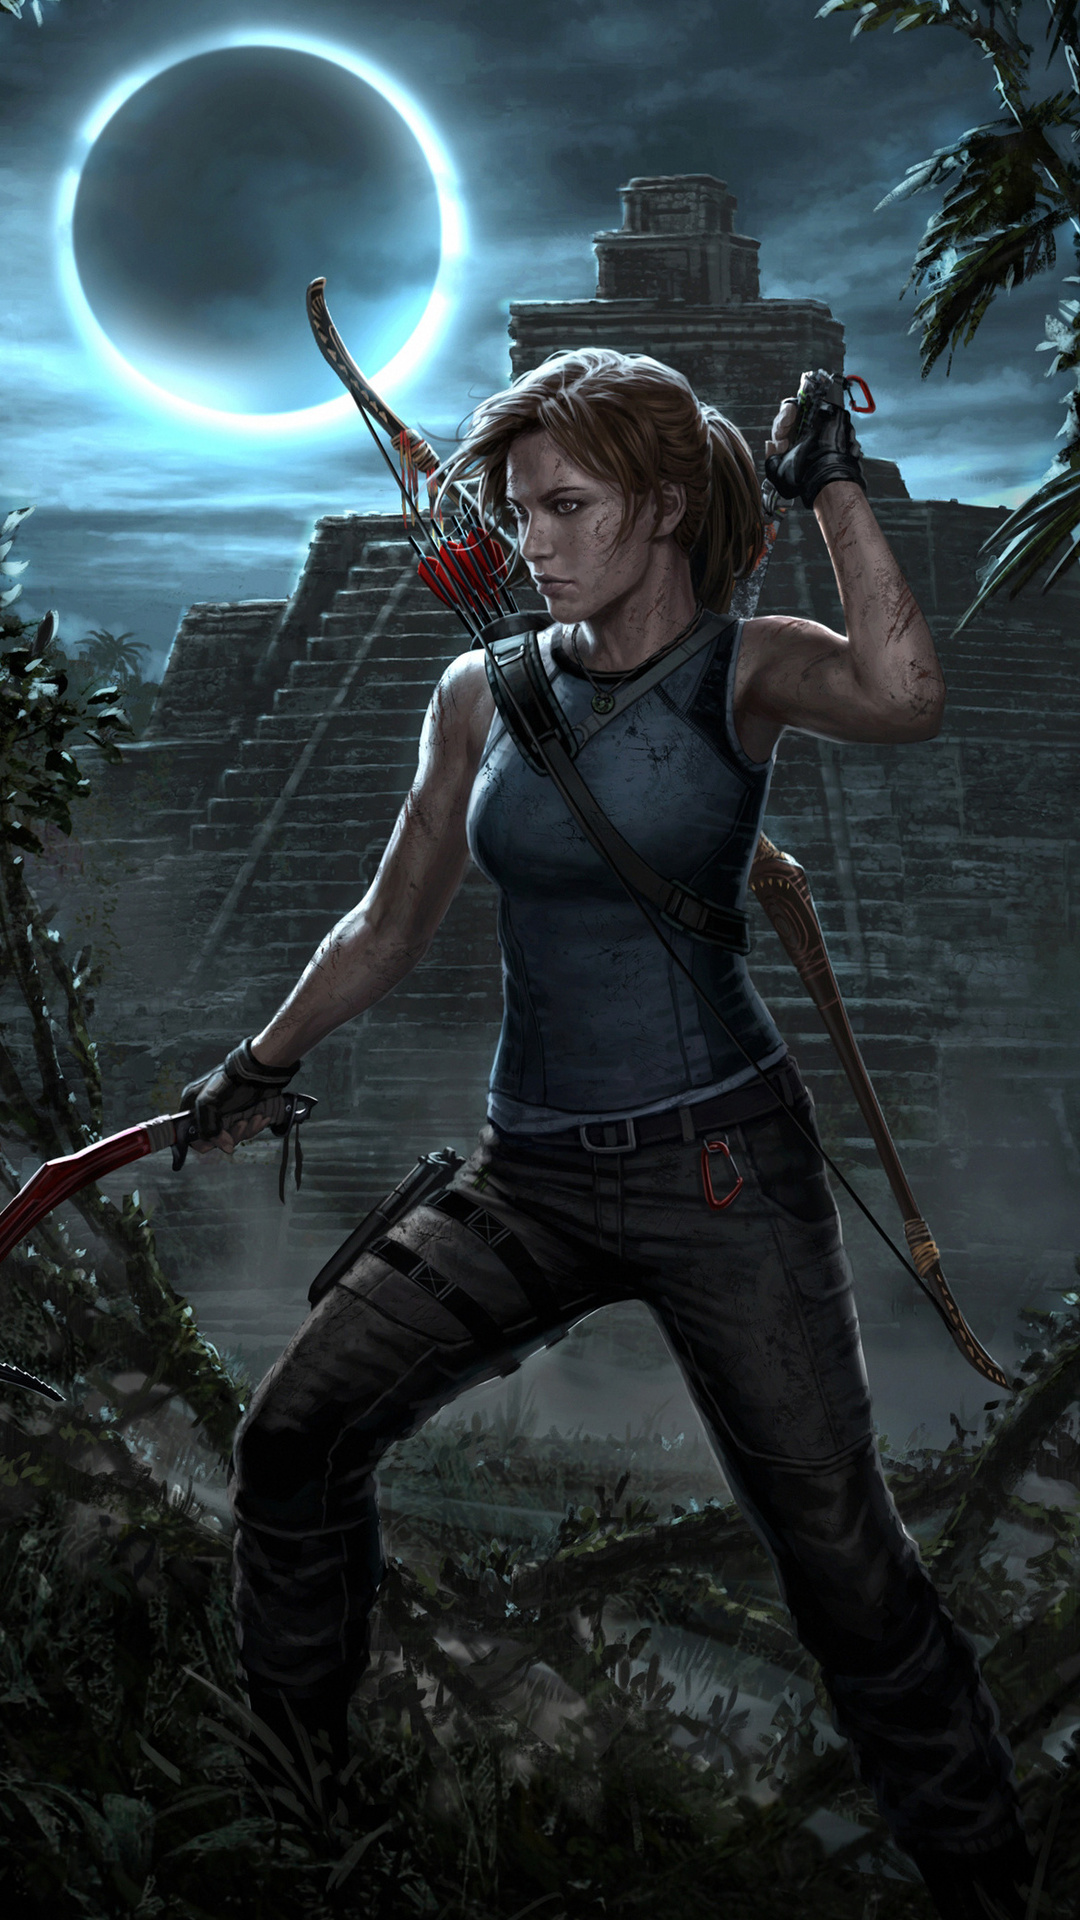 1080x1920 Lara Croft Shadow Of The Tomb Raider 4k Iphone 7,6s,6 Plus